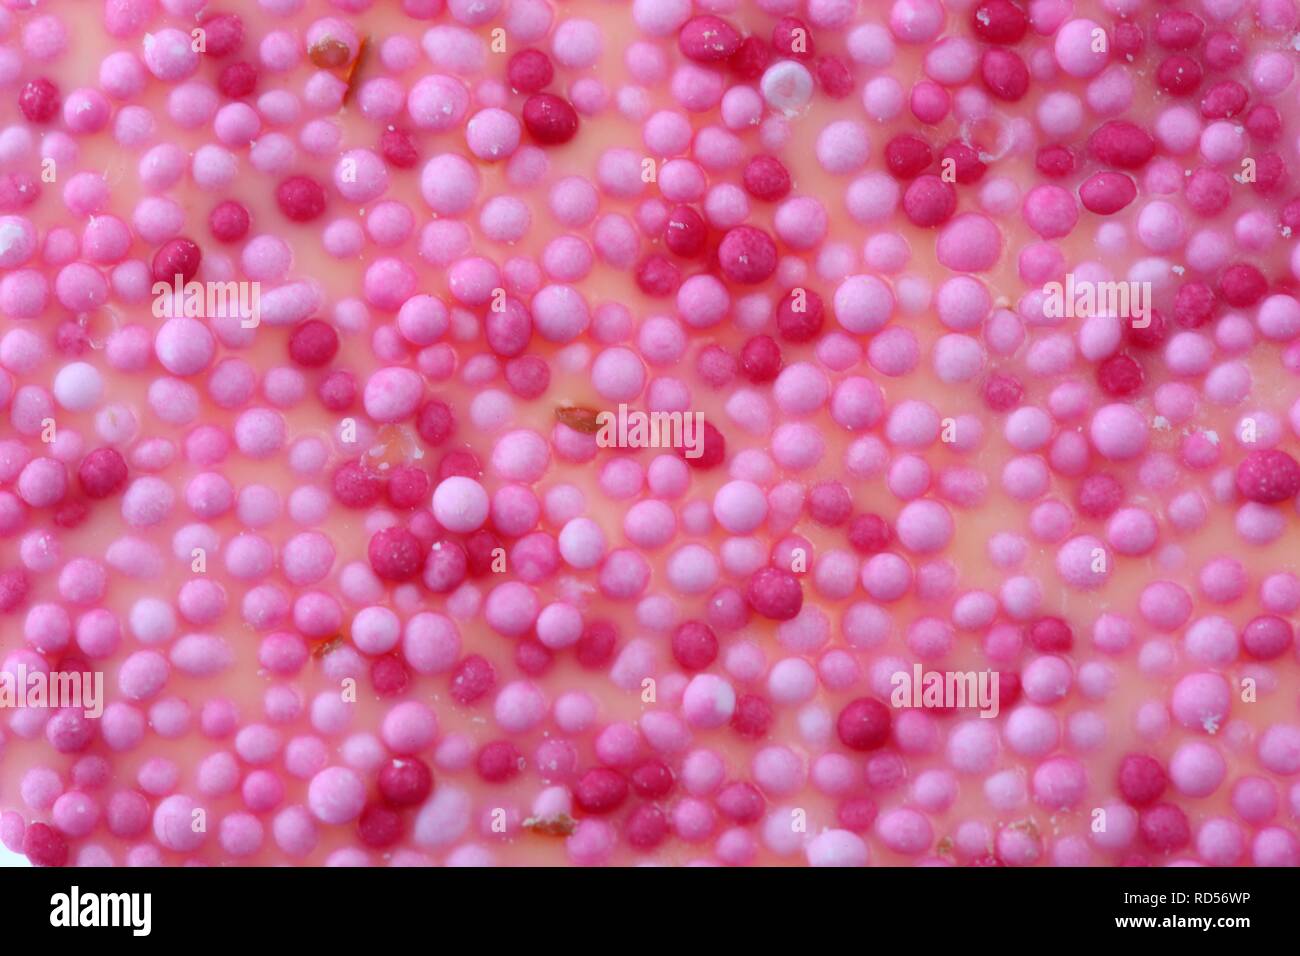 Pink pearl sugar coating Stock Photo